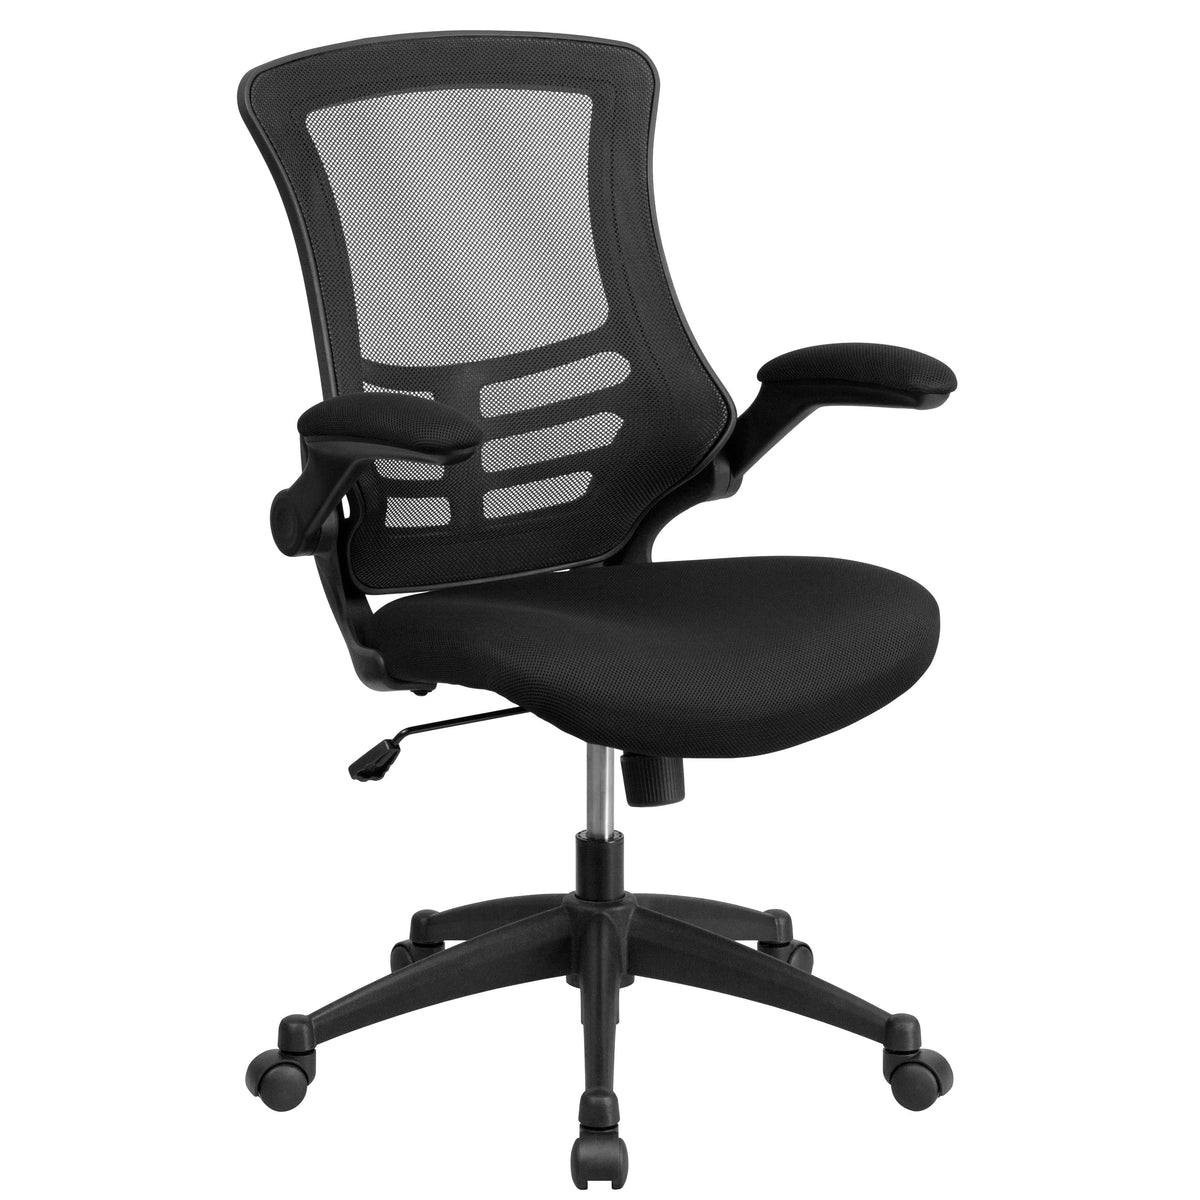 Office Set-Adjustable Computer Desk, Ergonomic Mesh Office Chair, Filing Cabinet